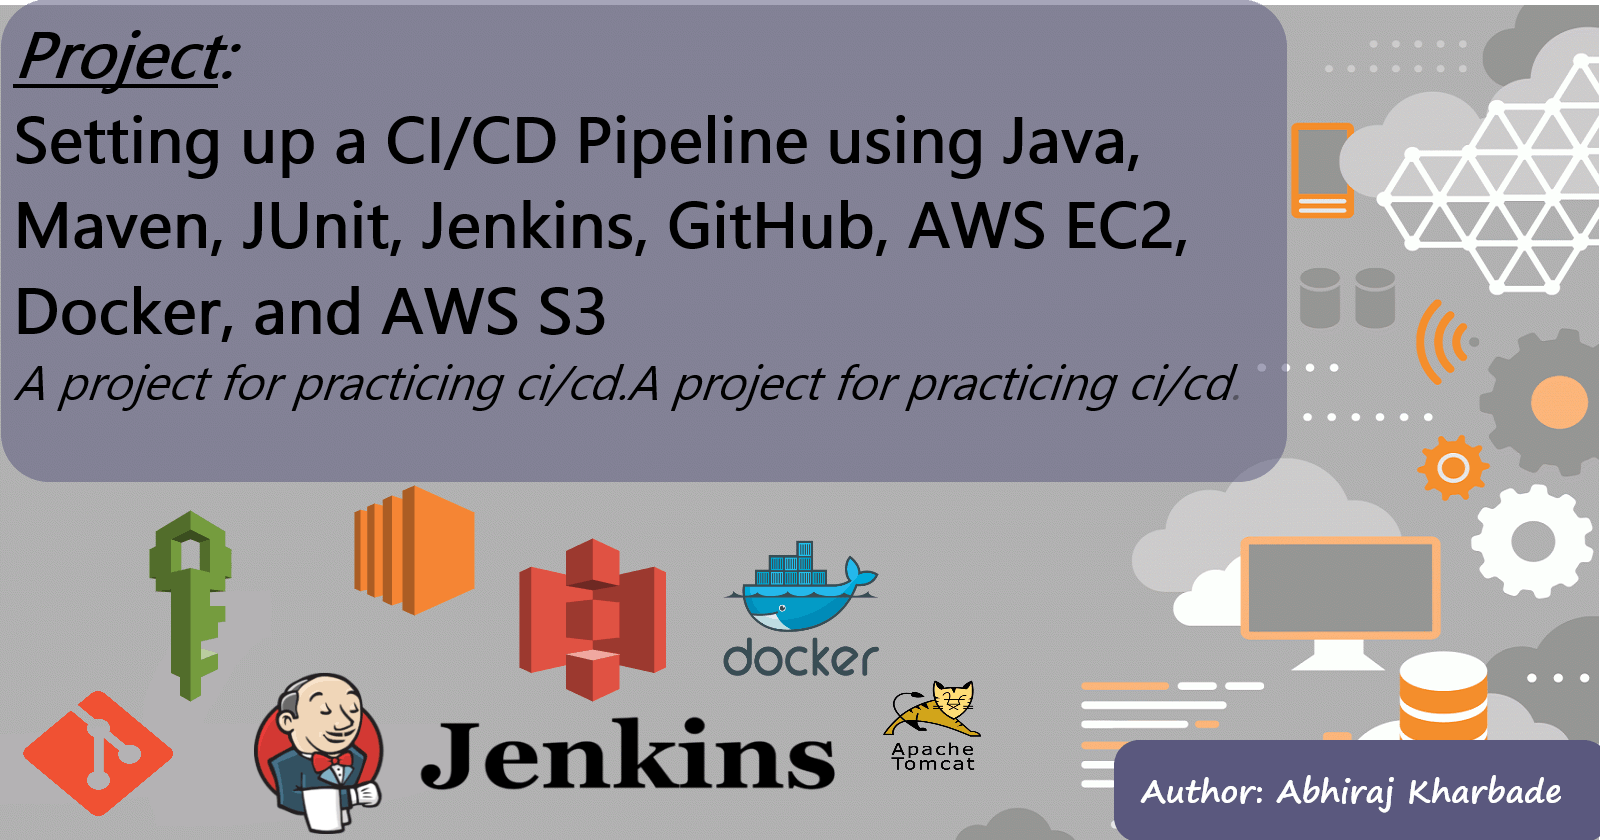 Project: Setting up a CI/CD Pipeline using Java, Maven, JUnit, Jenkins, GitHub, AWS EC2, Docker, and AWS S3